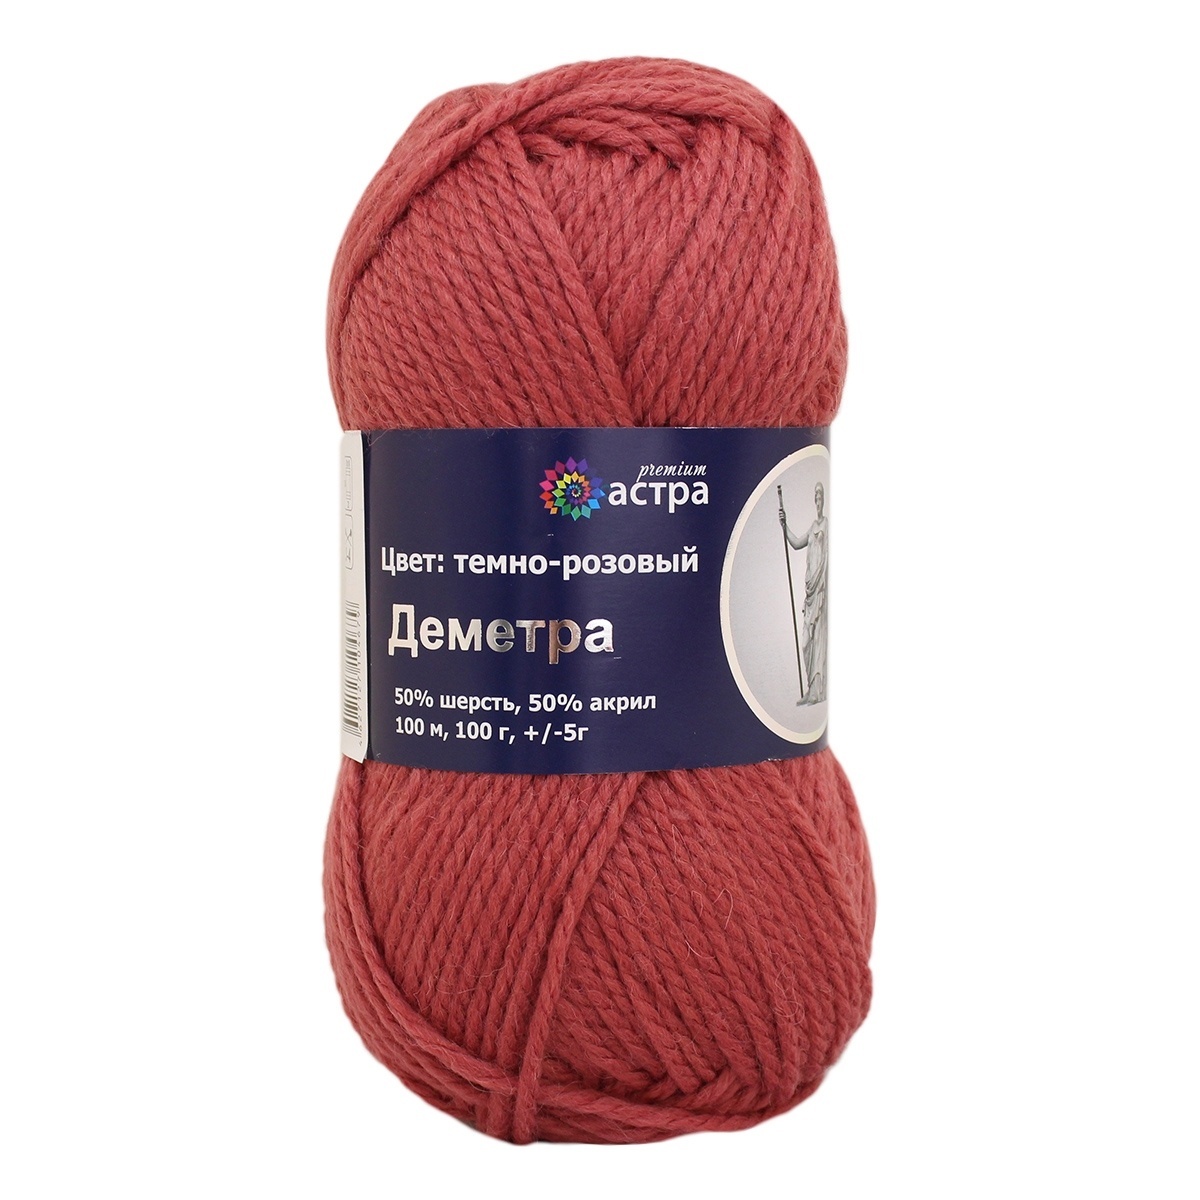 Astra Premium Demeter, 50% Wool, 50% Acrylic, 3 Skein Value Pack, 300g фото 14